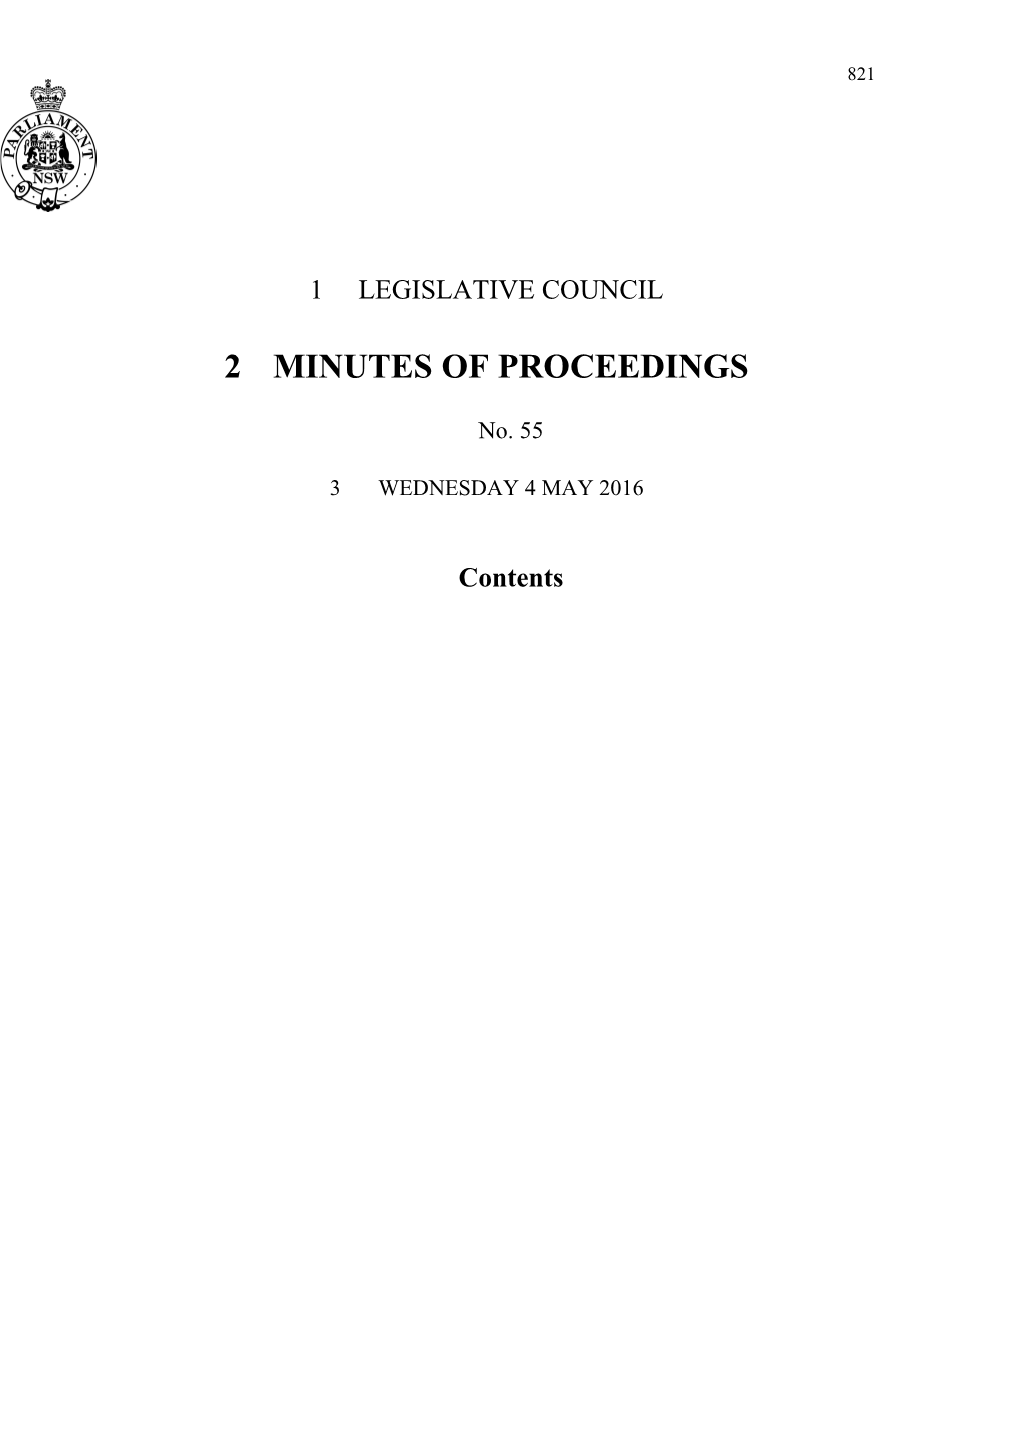 Legislative Council Minutes No. 55 Wednesday 4 May 2016